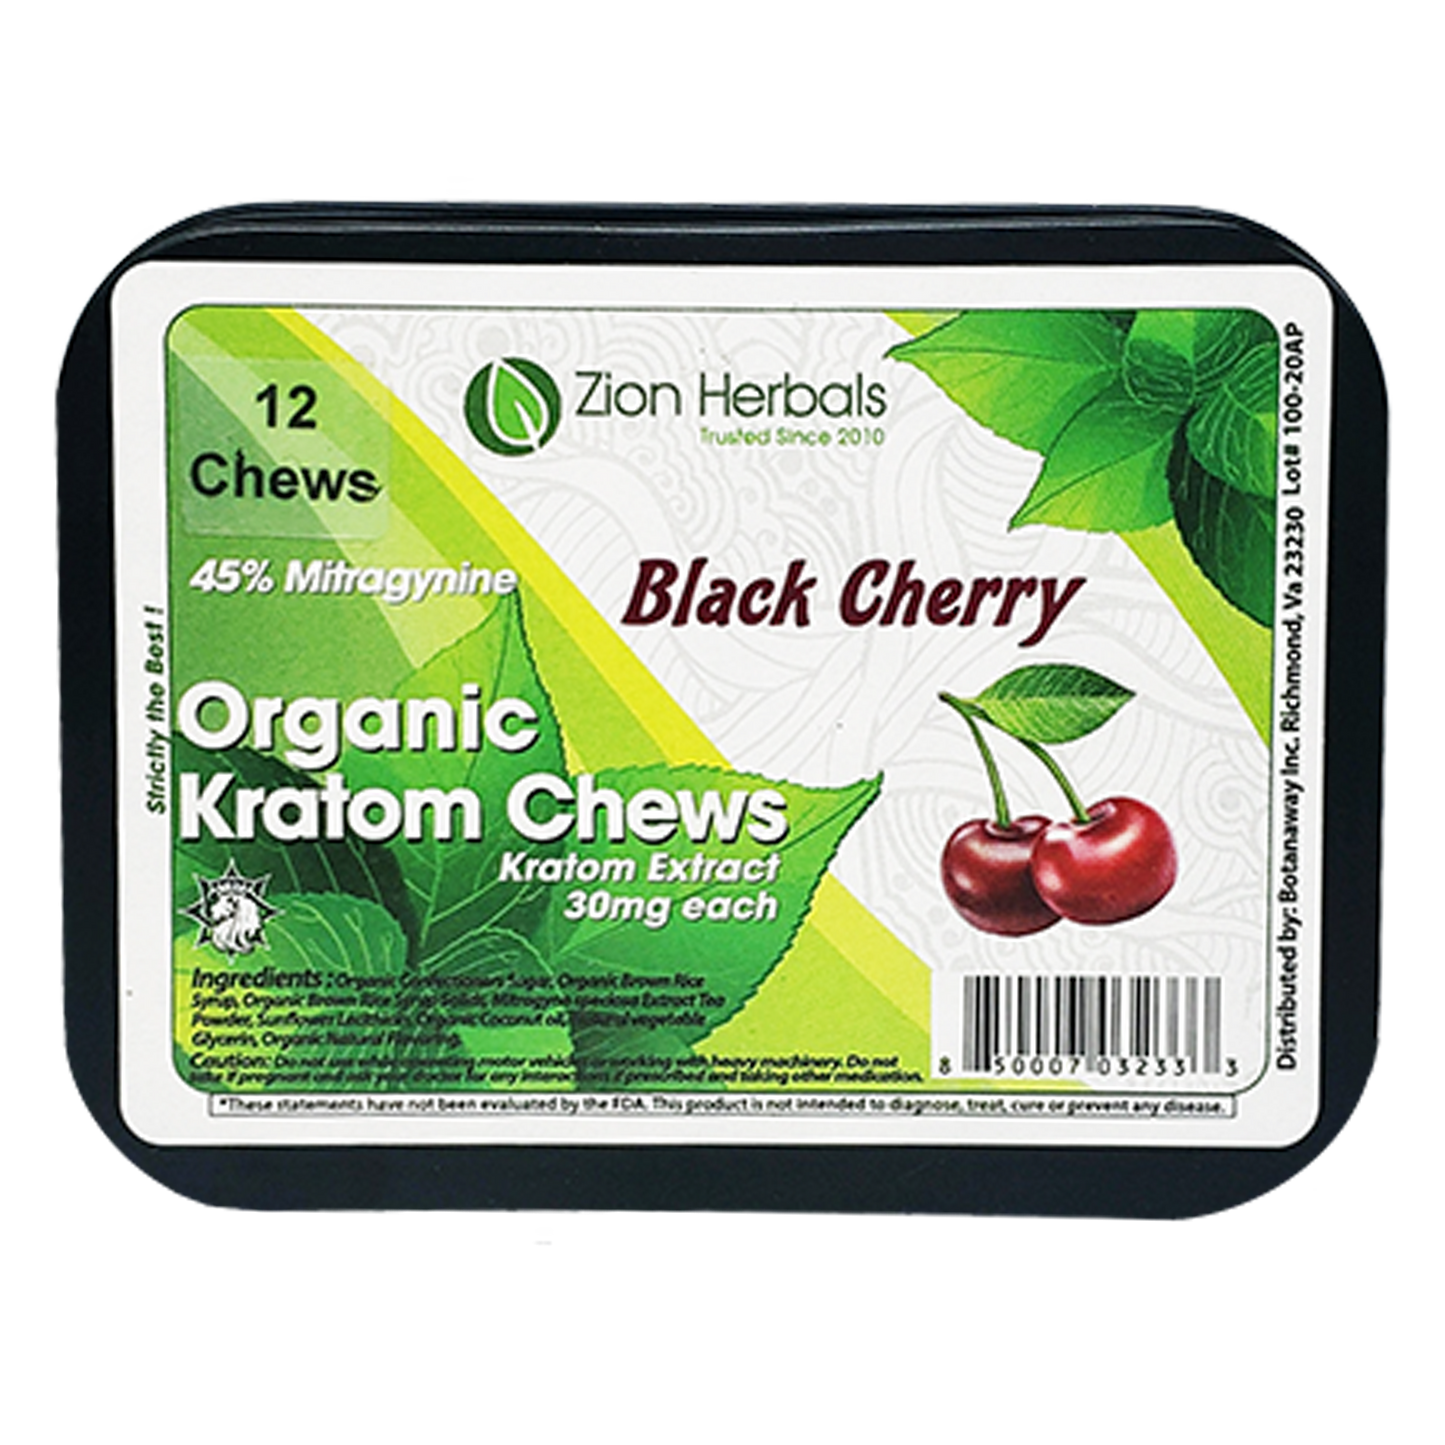 Zion Herbals 30mg Kratom Extract Chews. Black Cherry